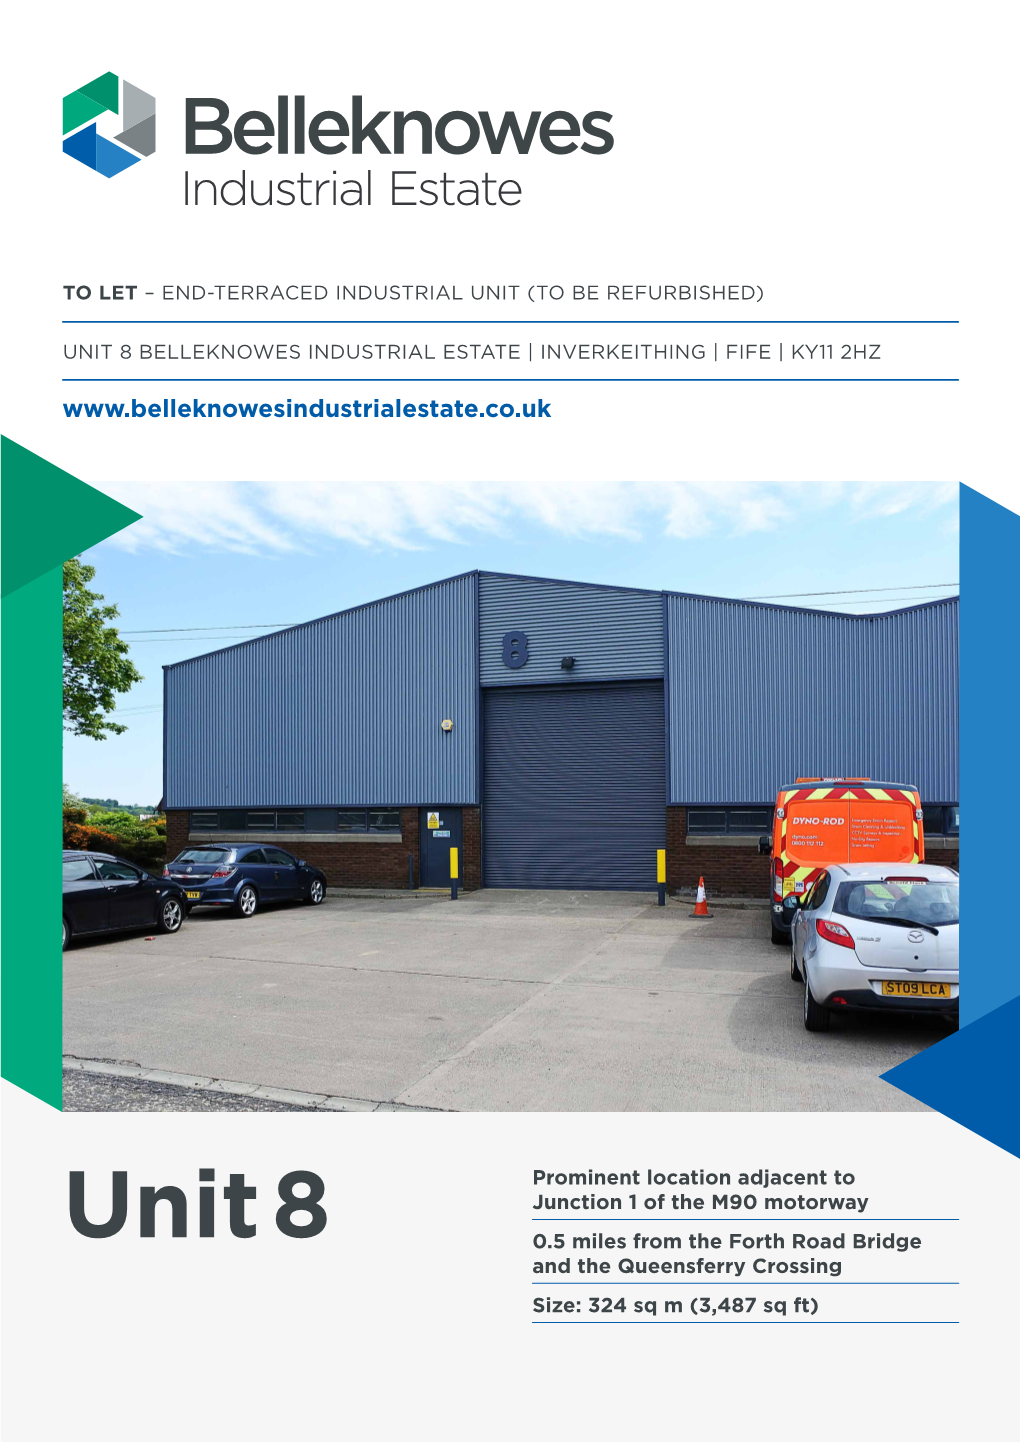 Unit 8 Belleknowes Industrial Estate | Inverkeithing | Fife | Ky11 2Hz